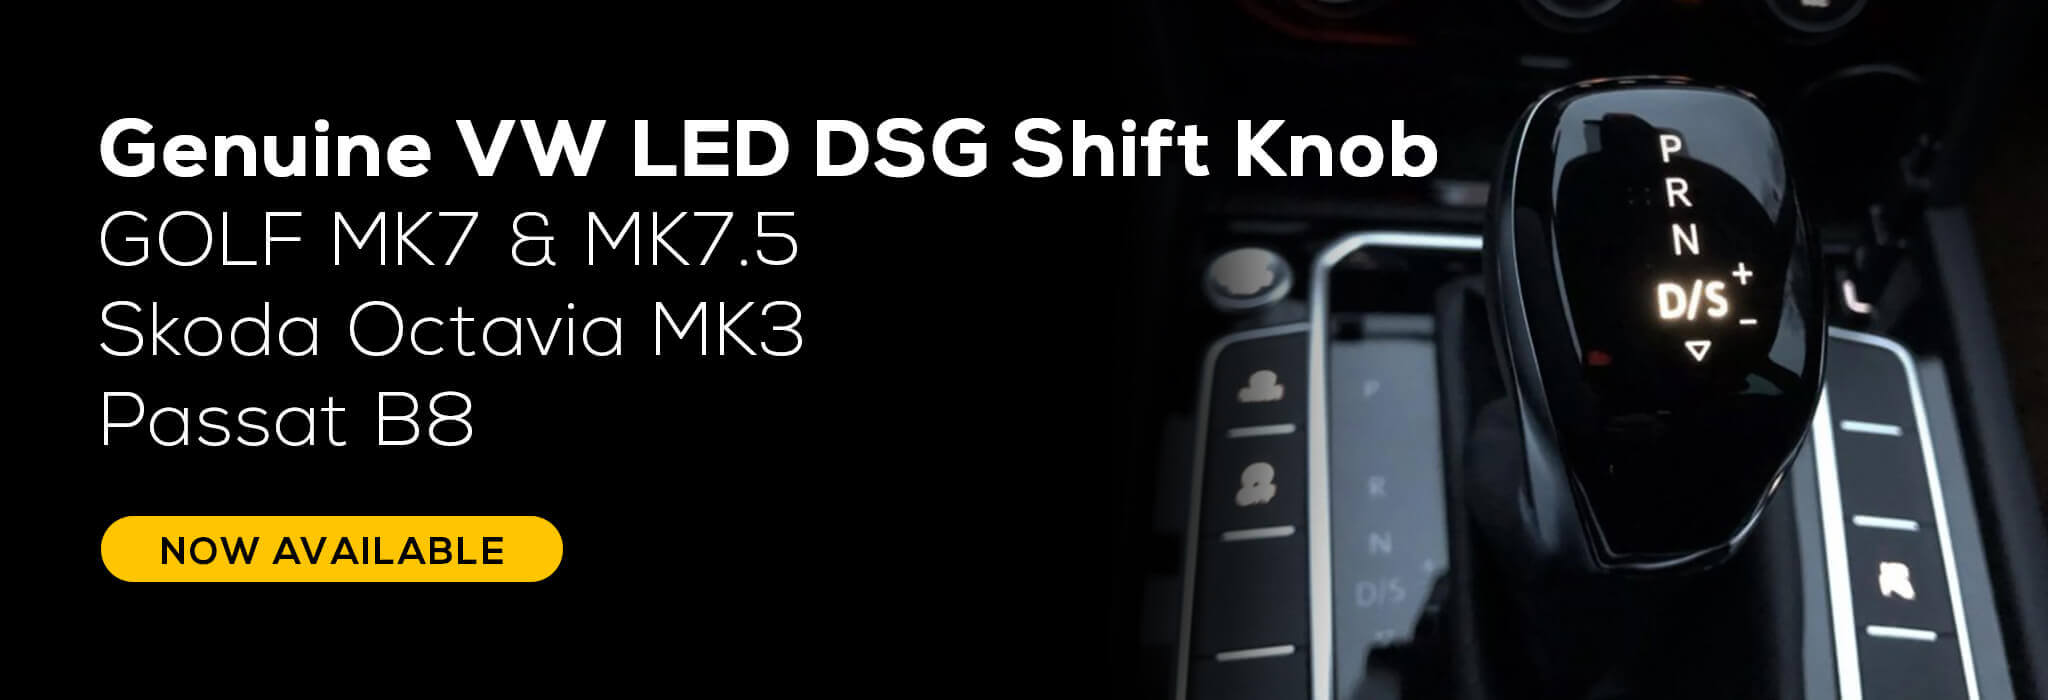 Genuine VW Digital DSG LED Shift Knob